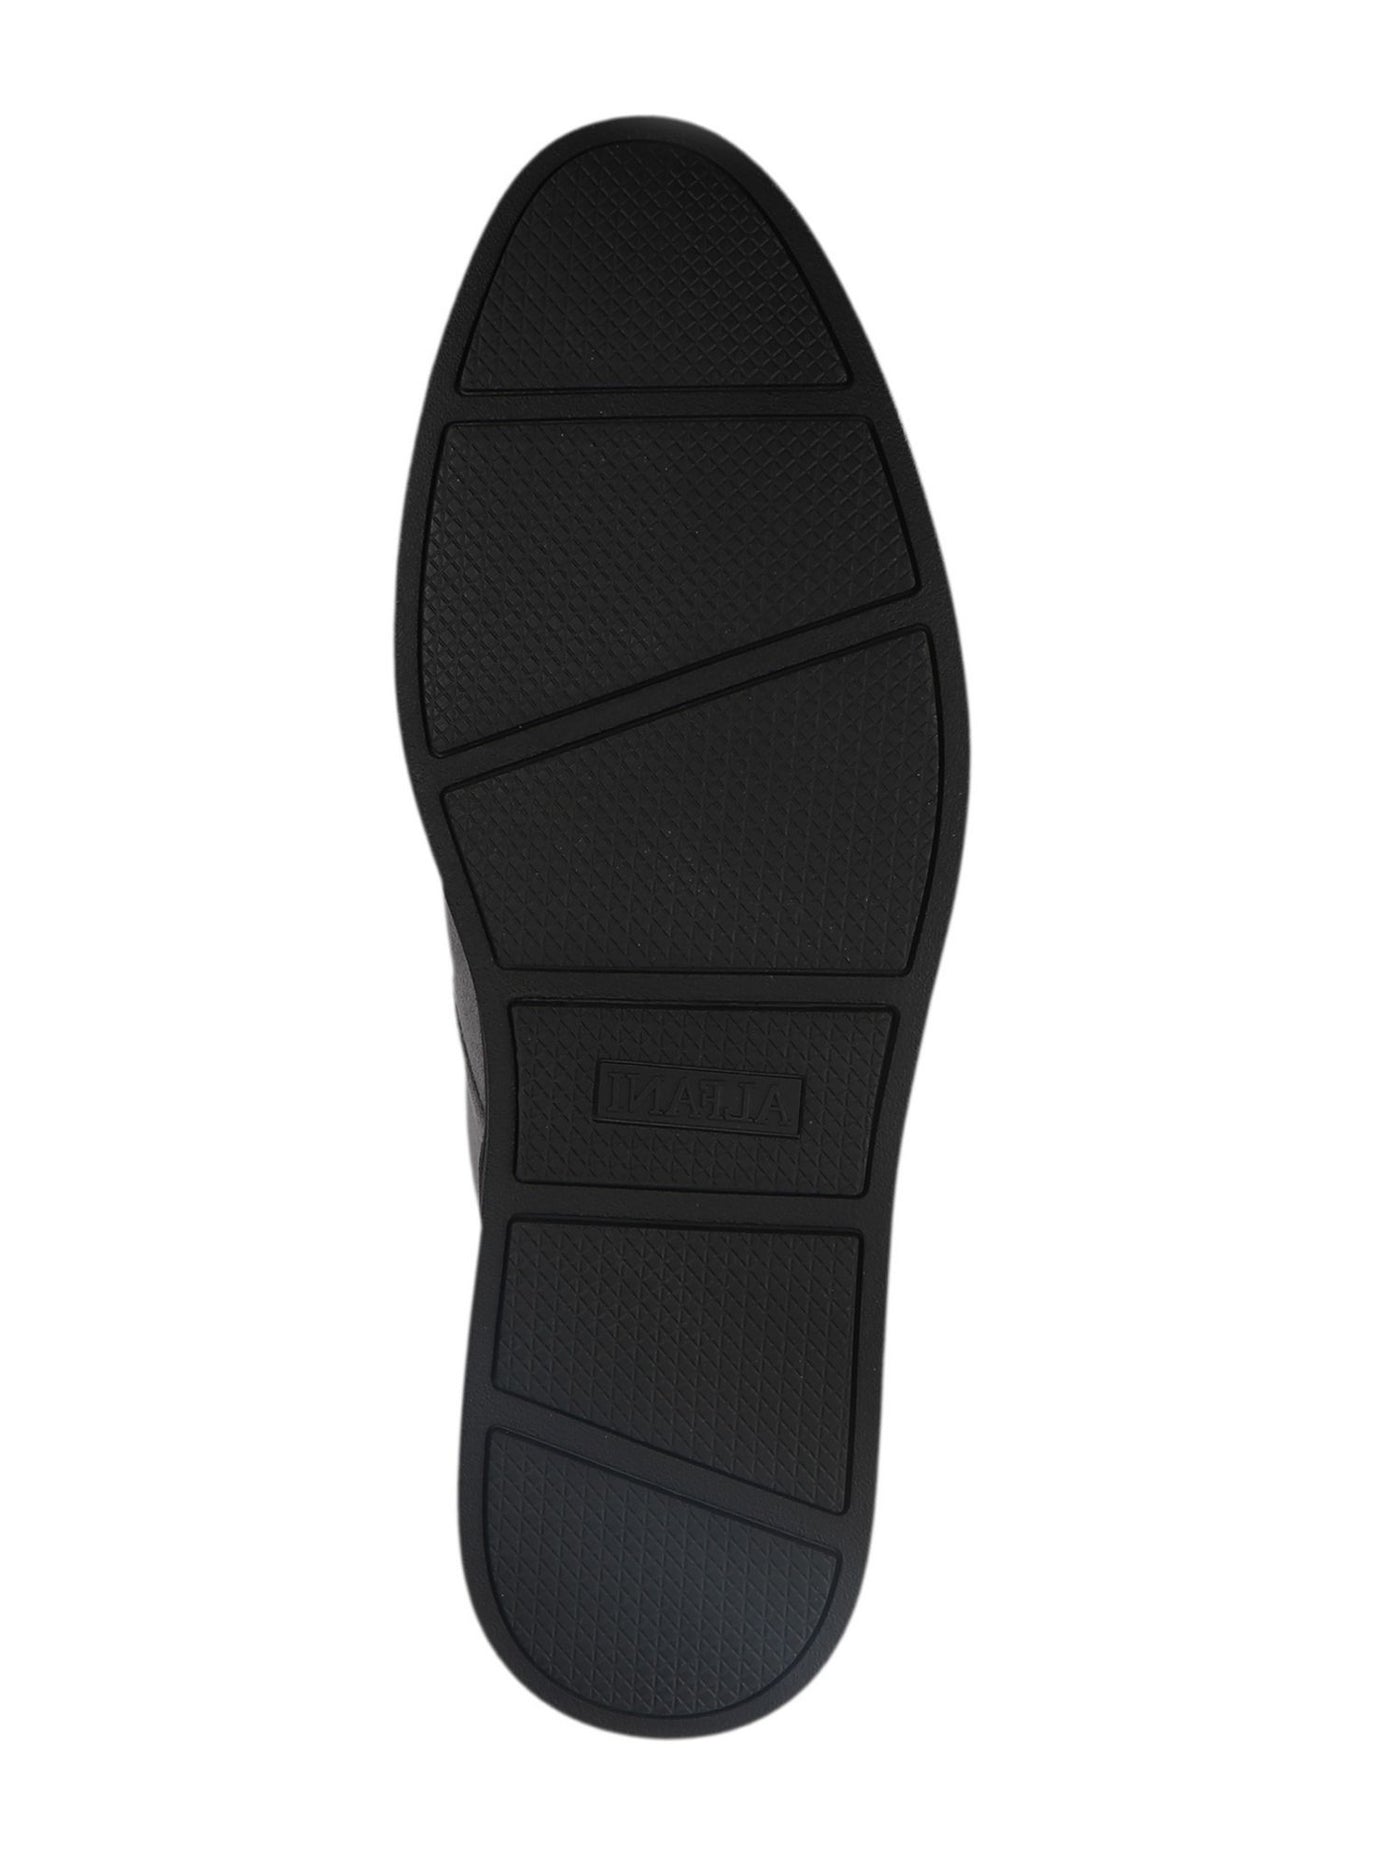 ALFANI Mens Gray Comfort Barrett Round Toe Lace-Up Chukka Boots 7.5 M